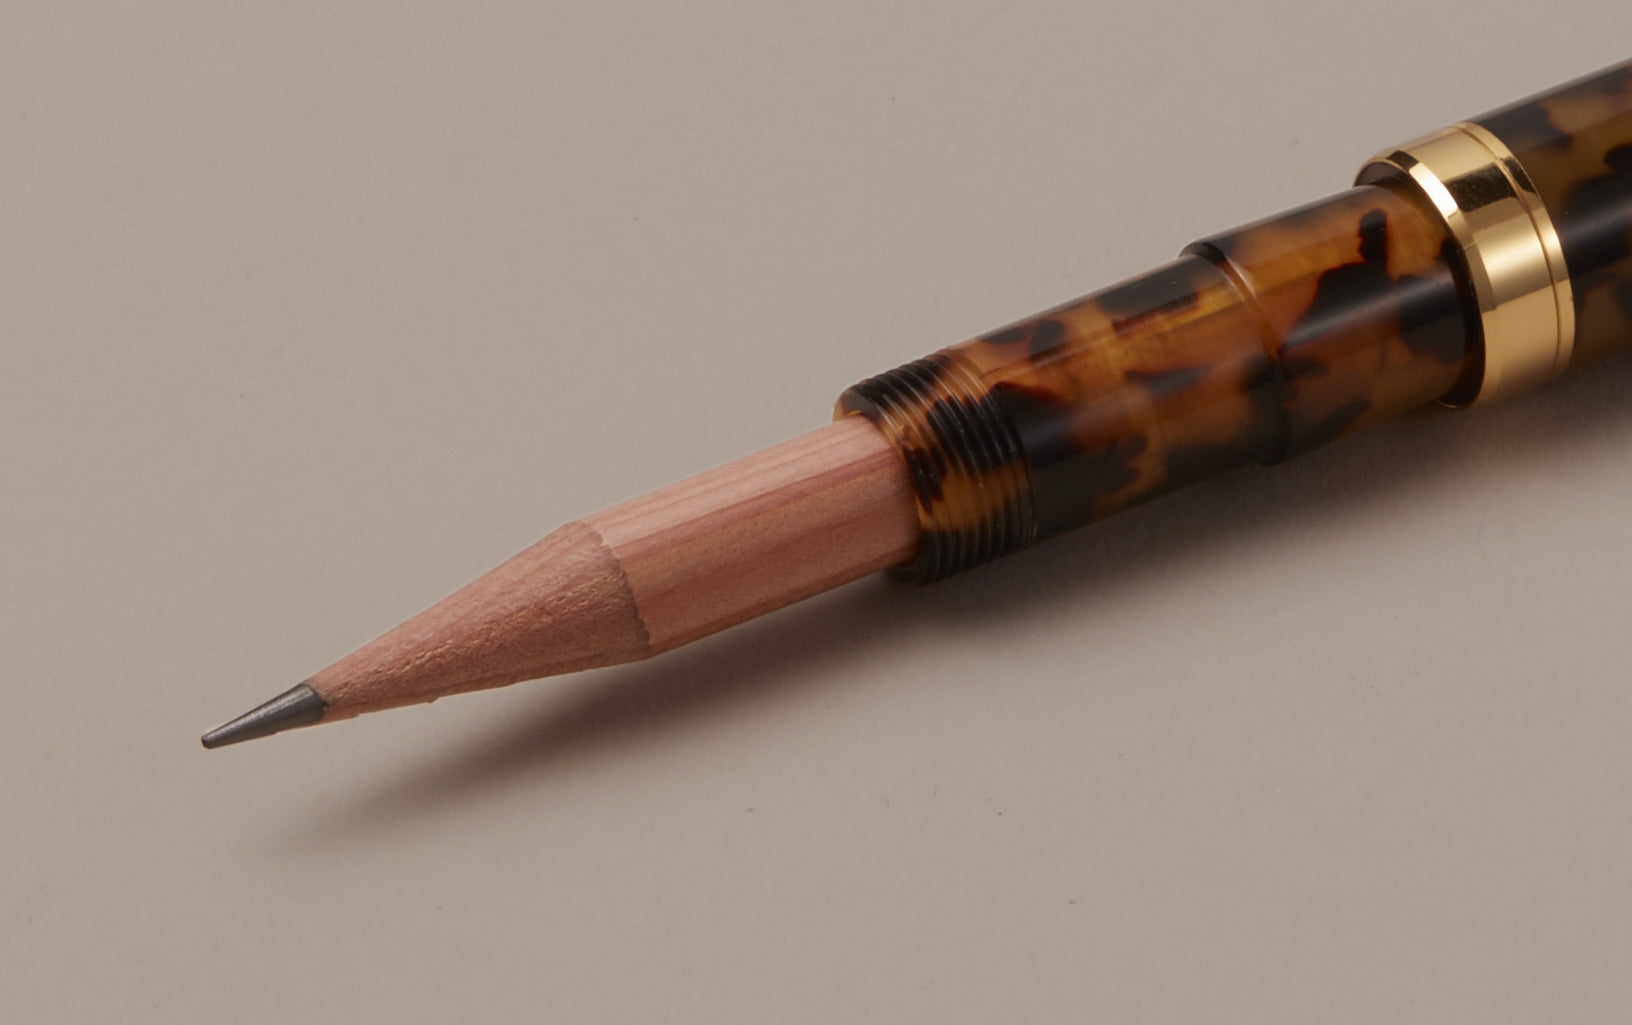 Ohnishi Seisakusho Tortoise Shell Celluloid Pencil Extender and Holder